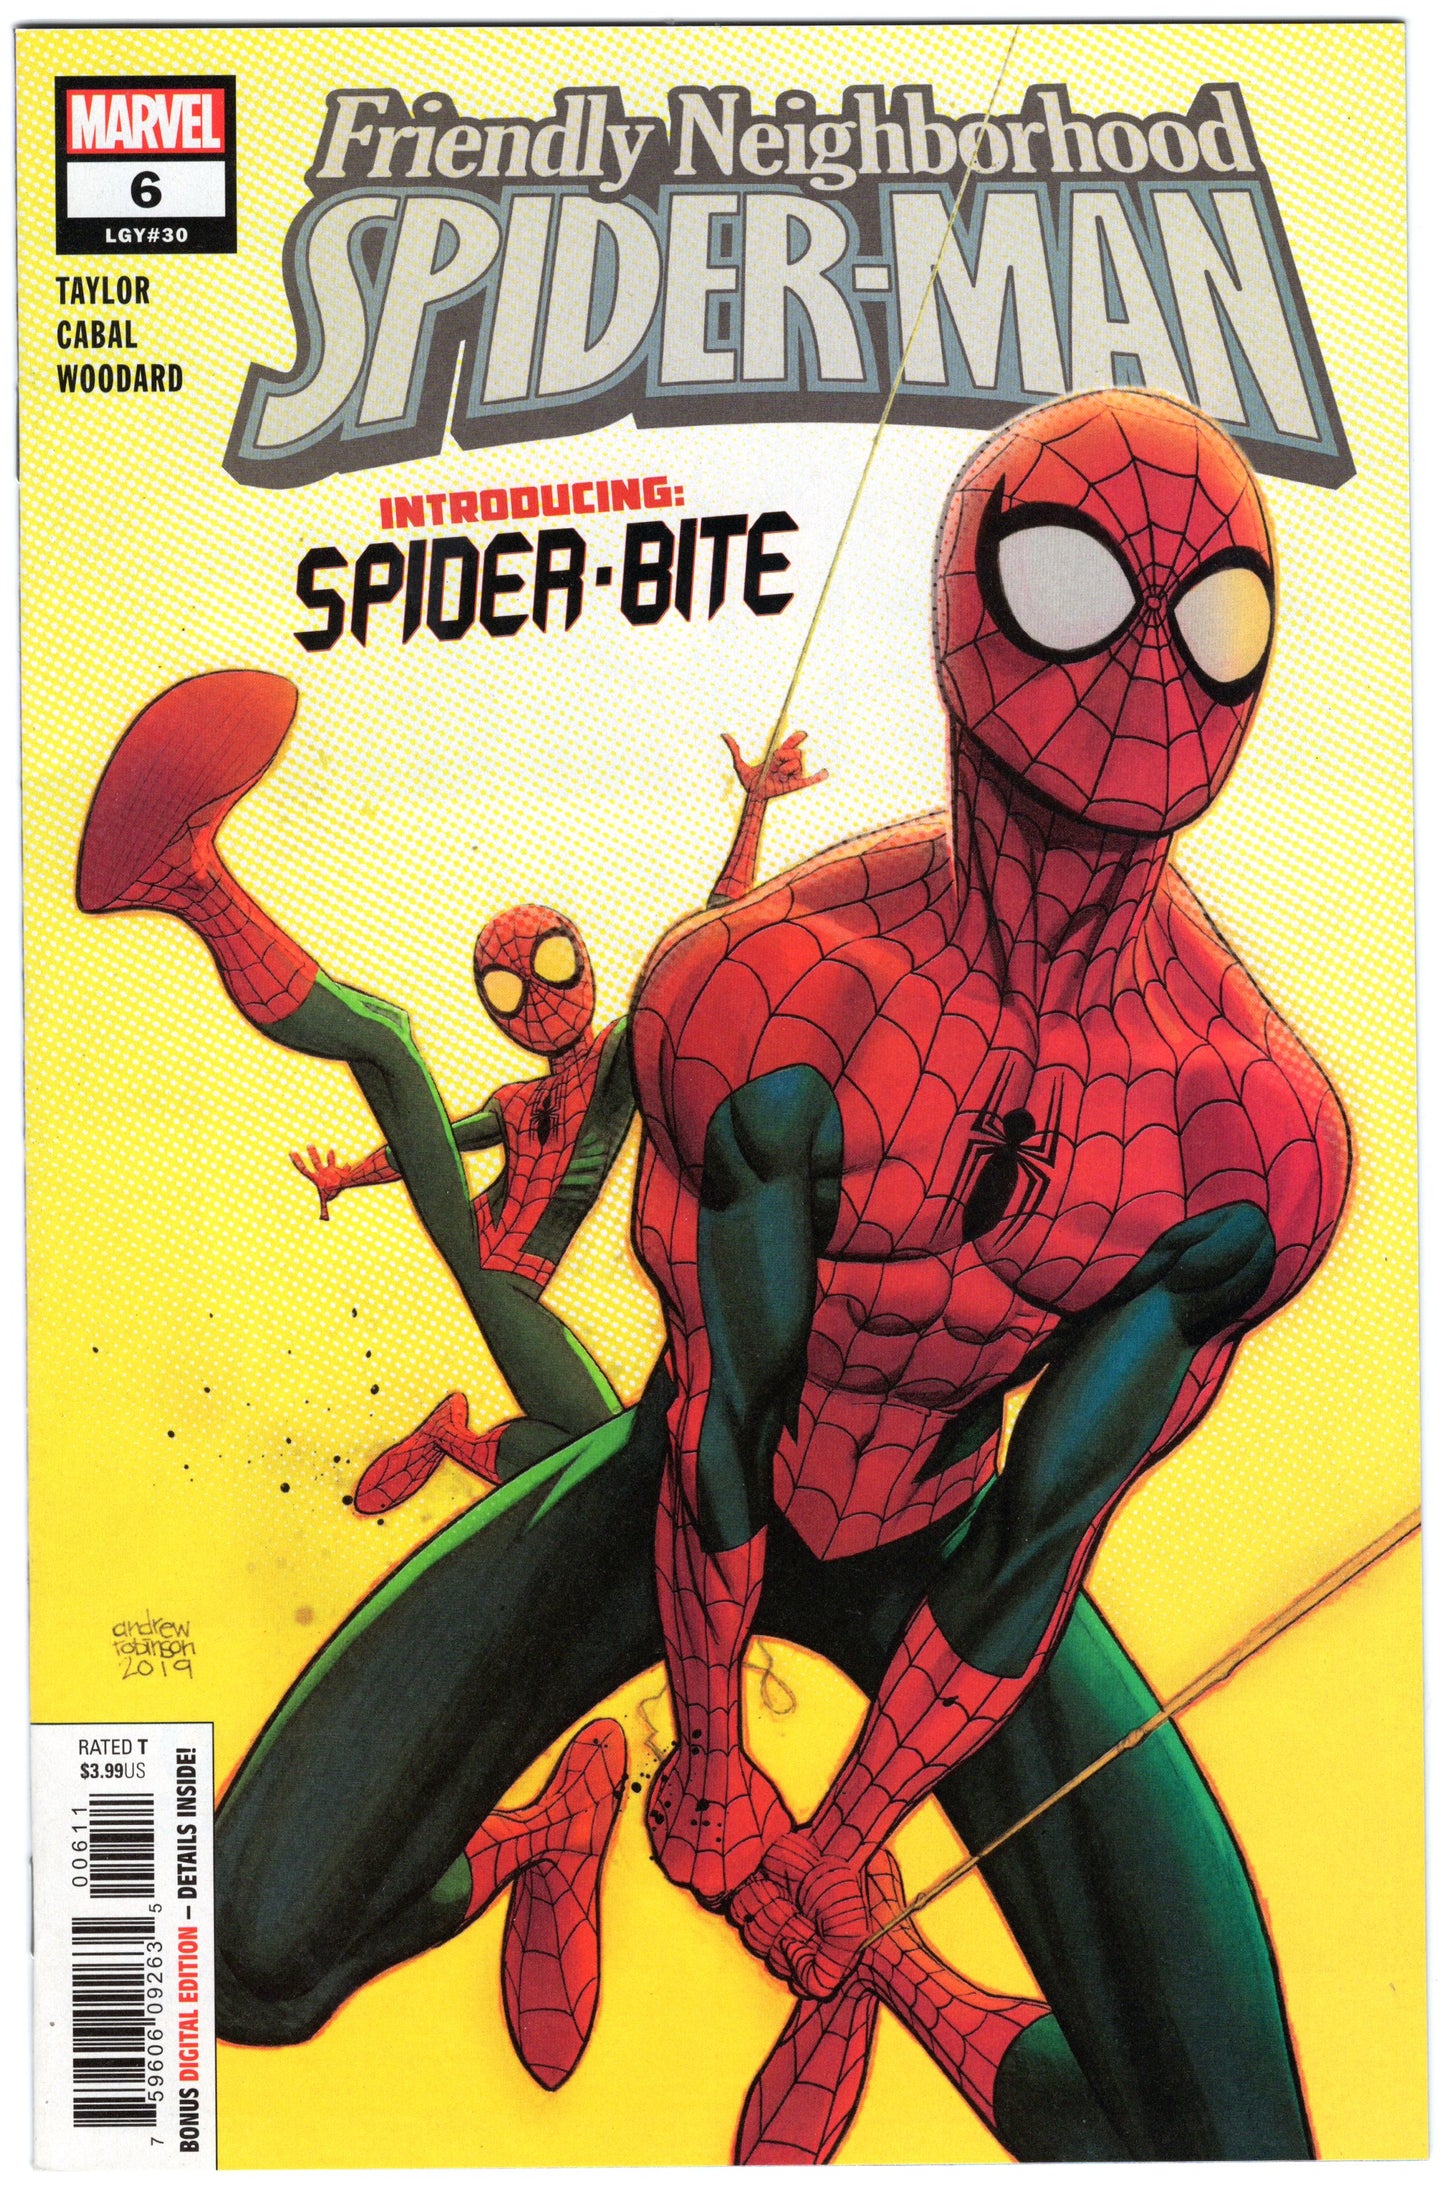 Friendly Neighborhood Spider-Man - Issue #6 "Introducing Spider-Bite" (July,2019 - Marvel Comics) NM